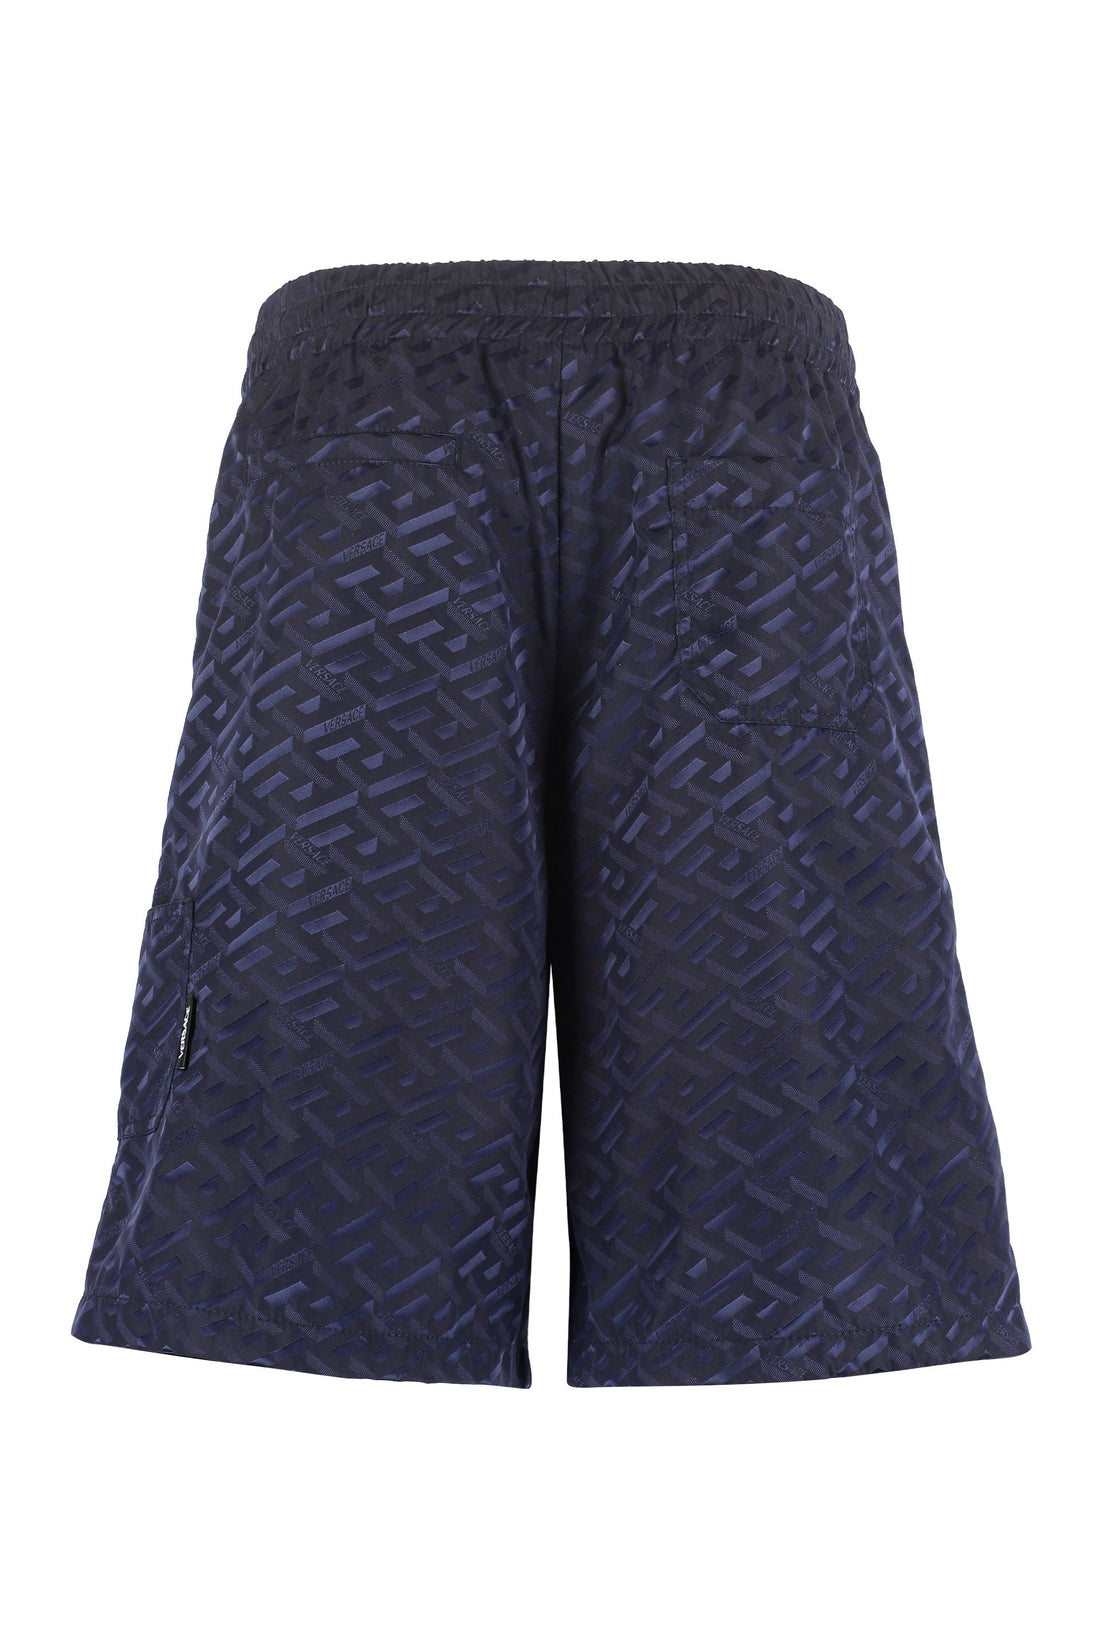 Versace-OUTLET-SALE-Techno fabric bermuda-shorts-ARCHIVIST